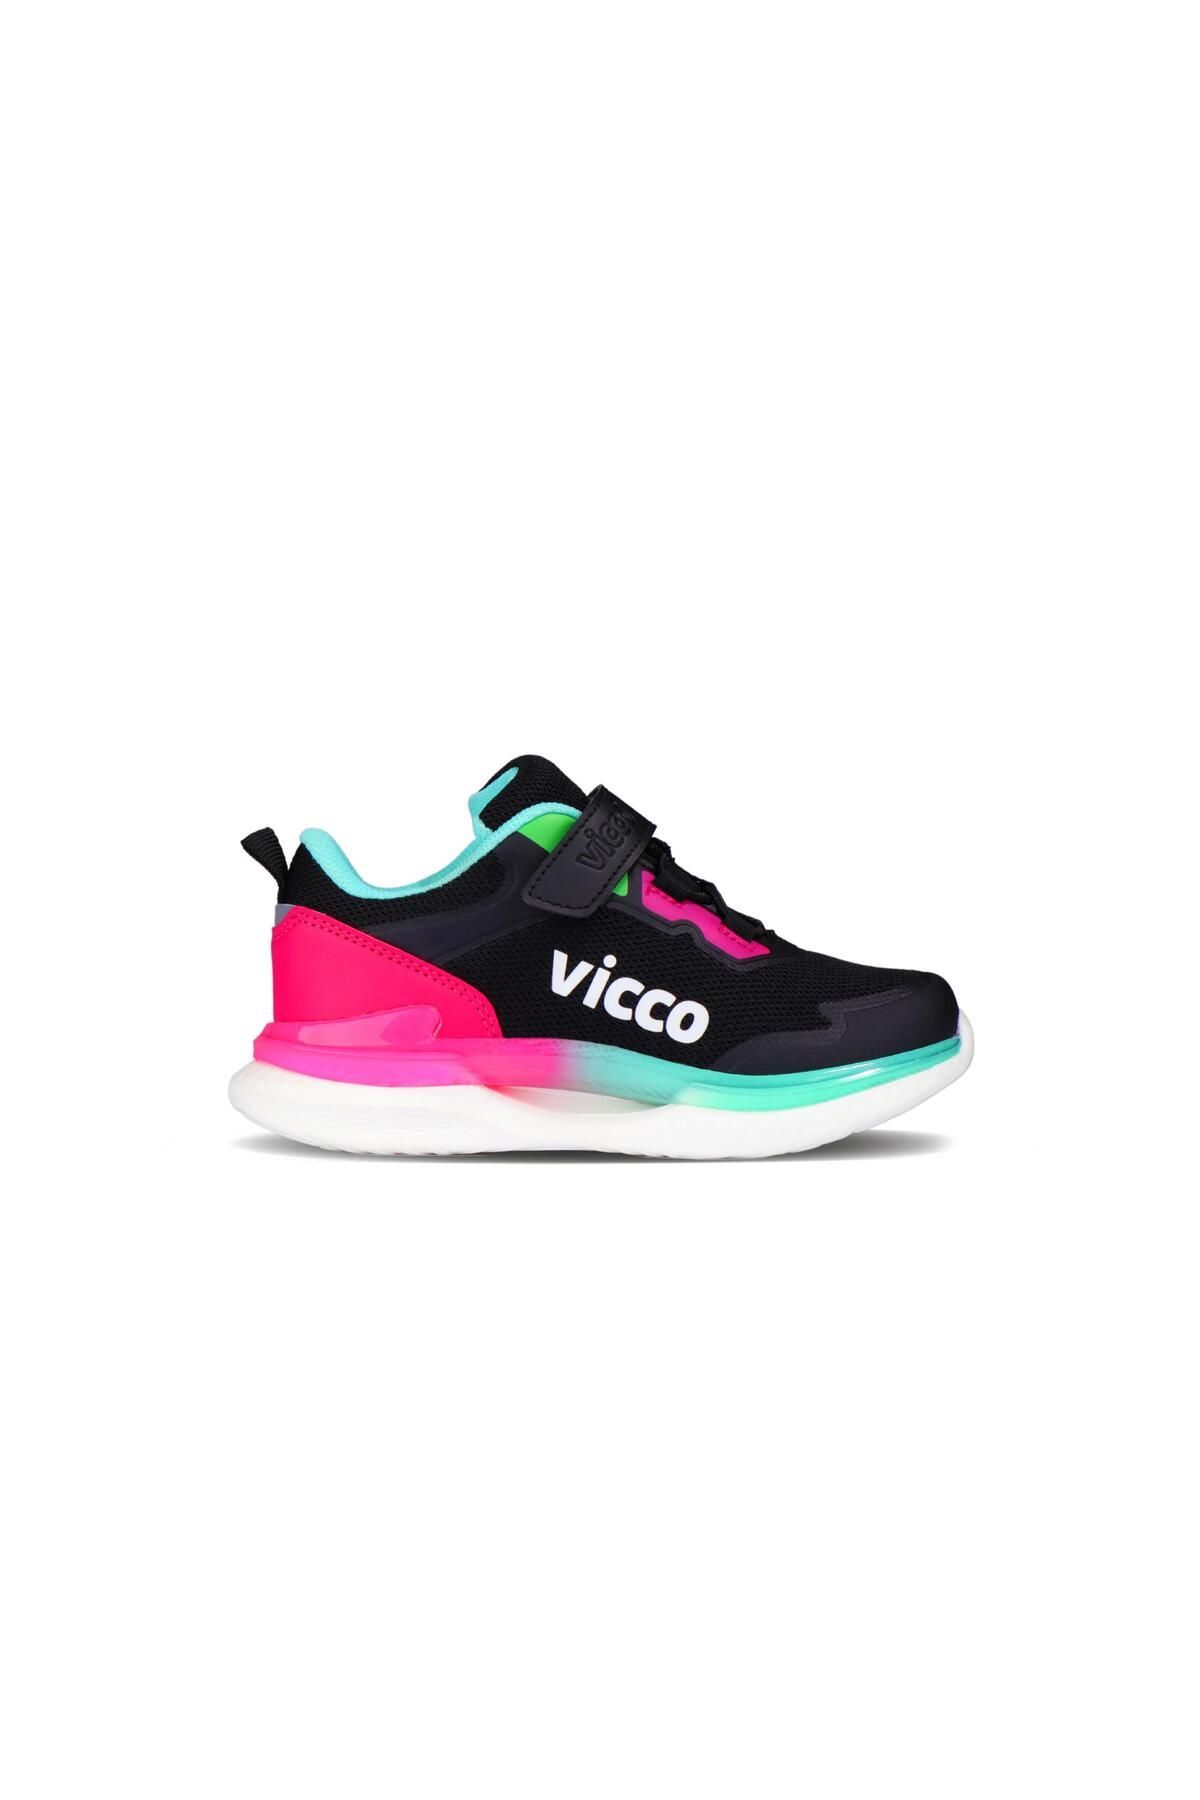 Vicco Yancy Hafif Ortopedik Kız Çocuk Siyah/Fuşya Sneaker